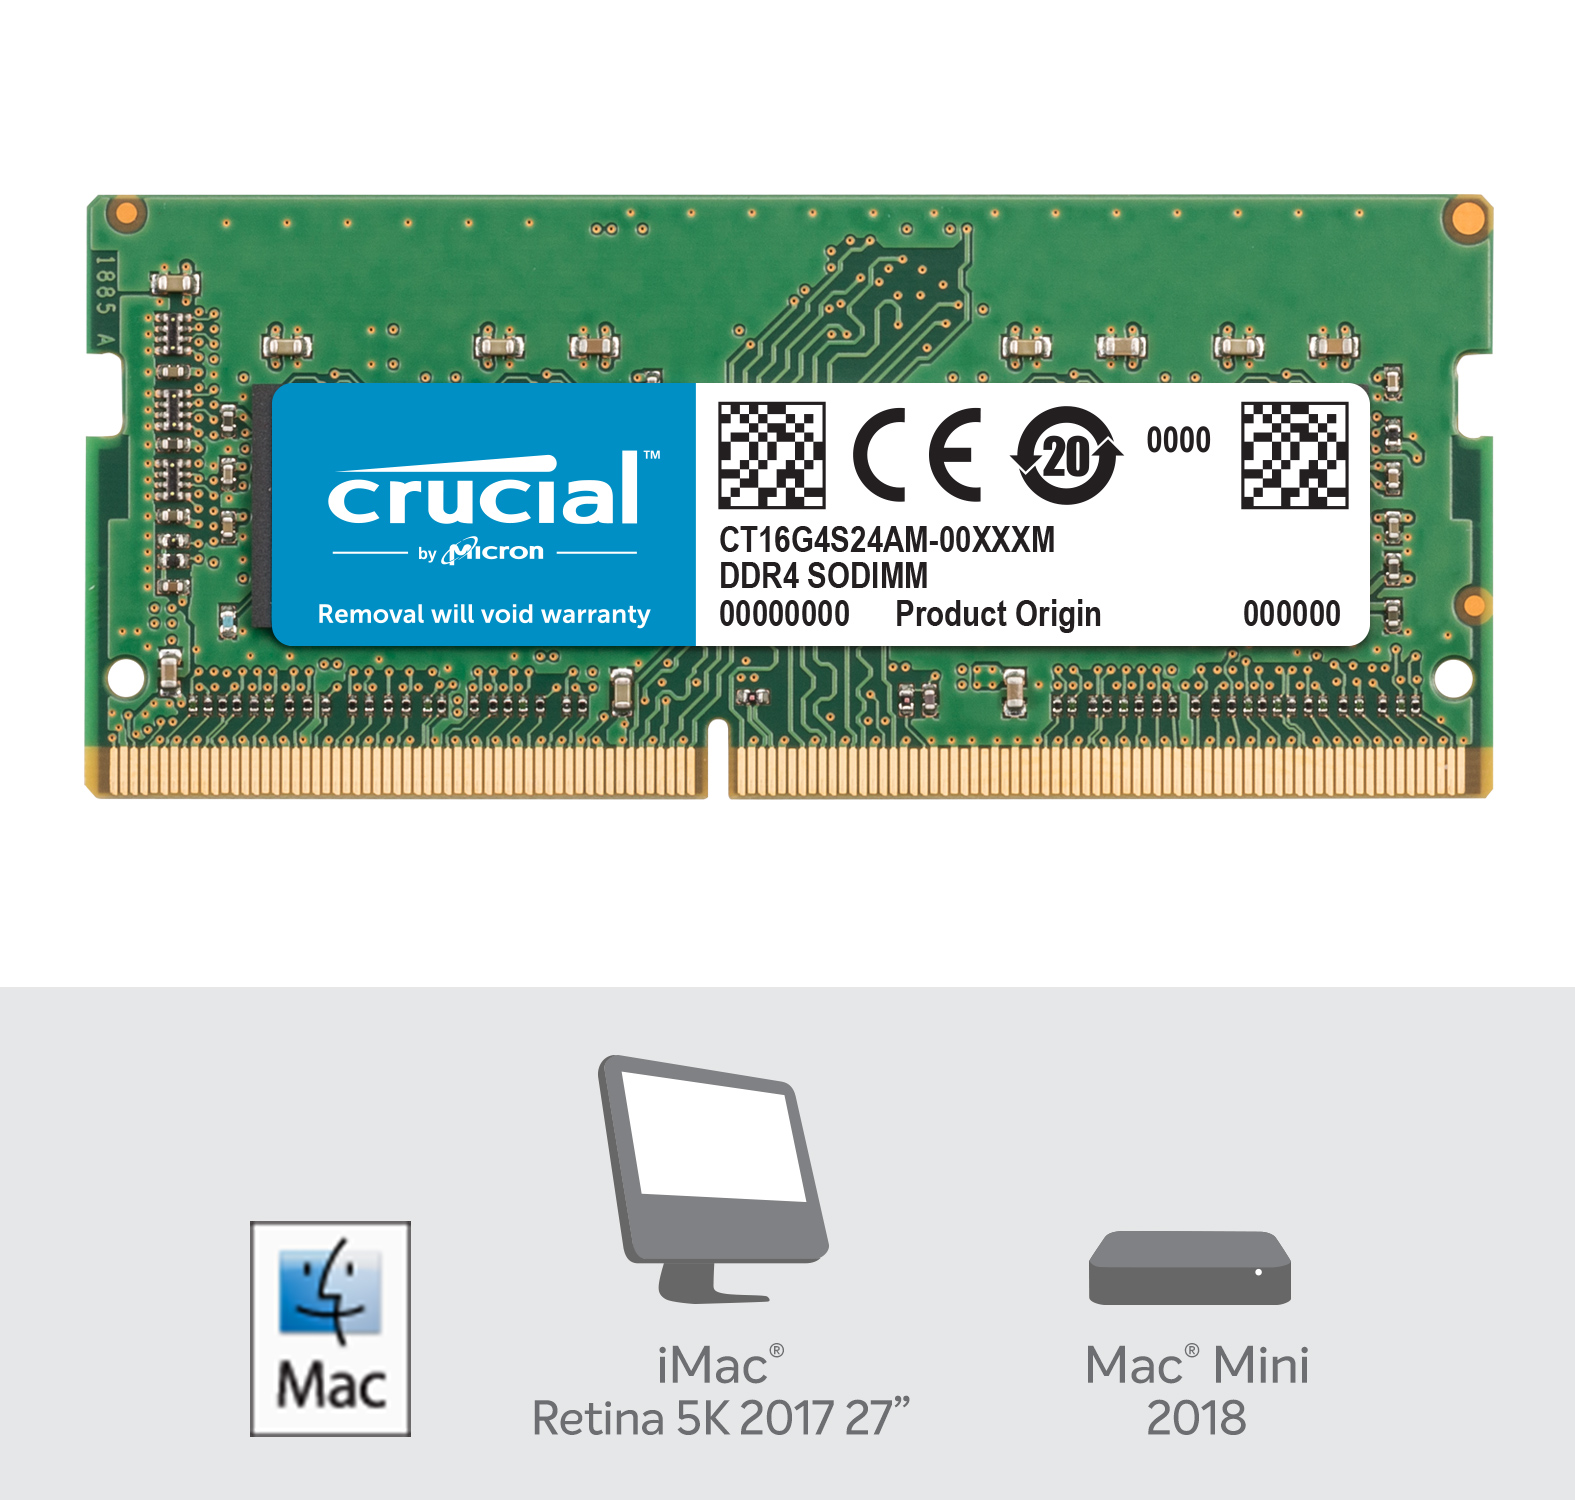 Crucial 16GB DDR4-2400 SODIMM Memory for Mac | CT16G4S24AM